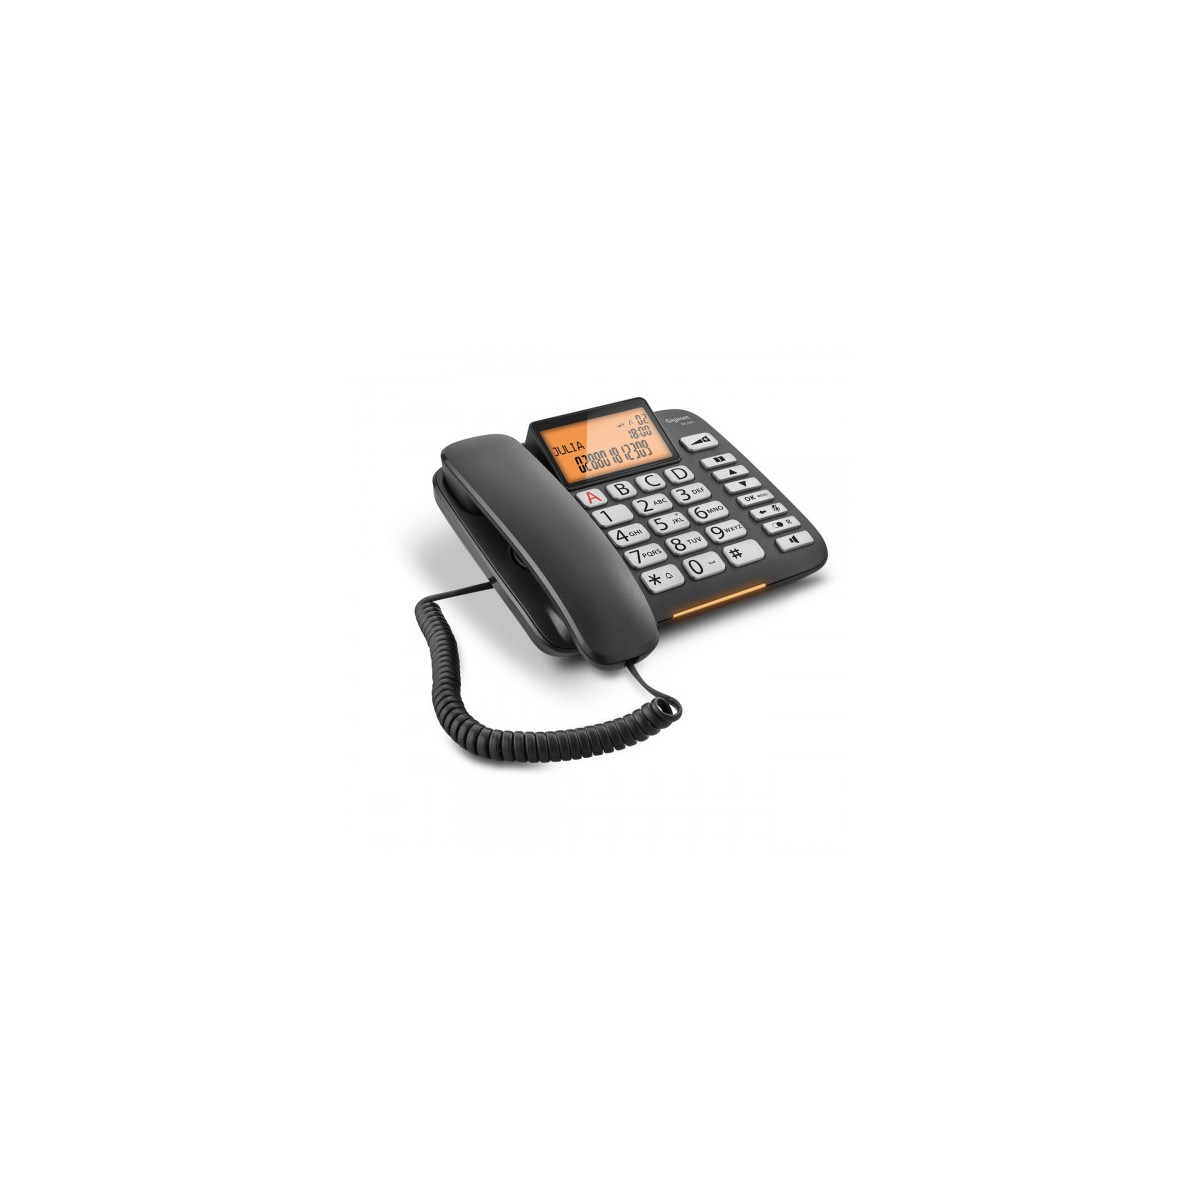 Gigaset DL 580 telefono Telefono analogico Negro Identificador de llamadas